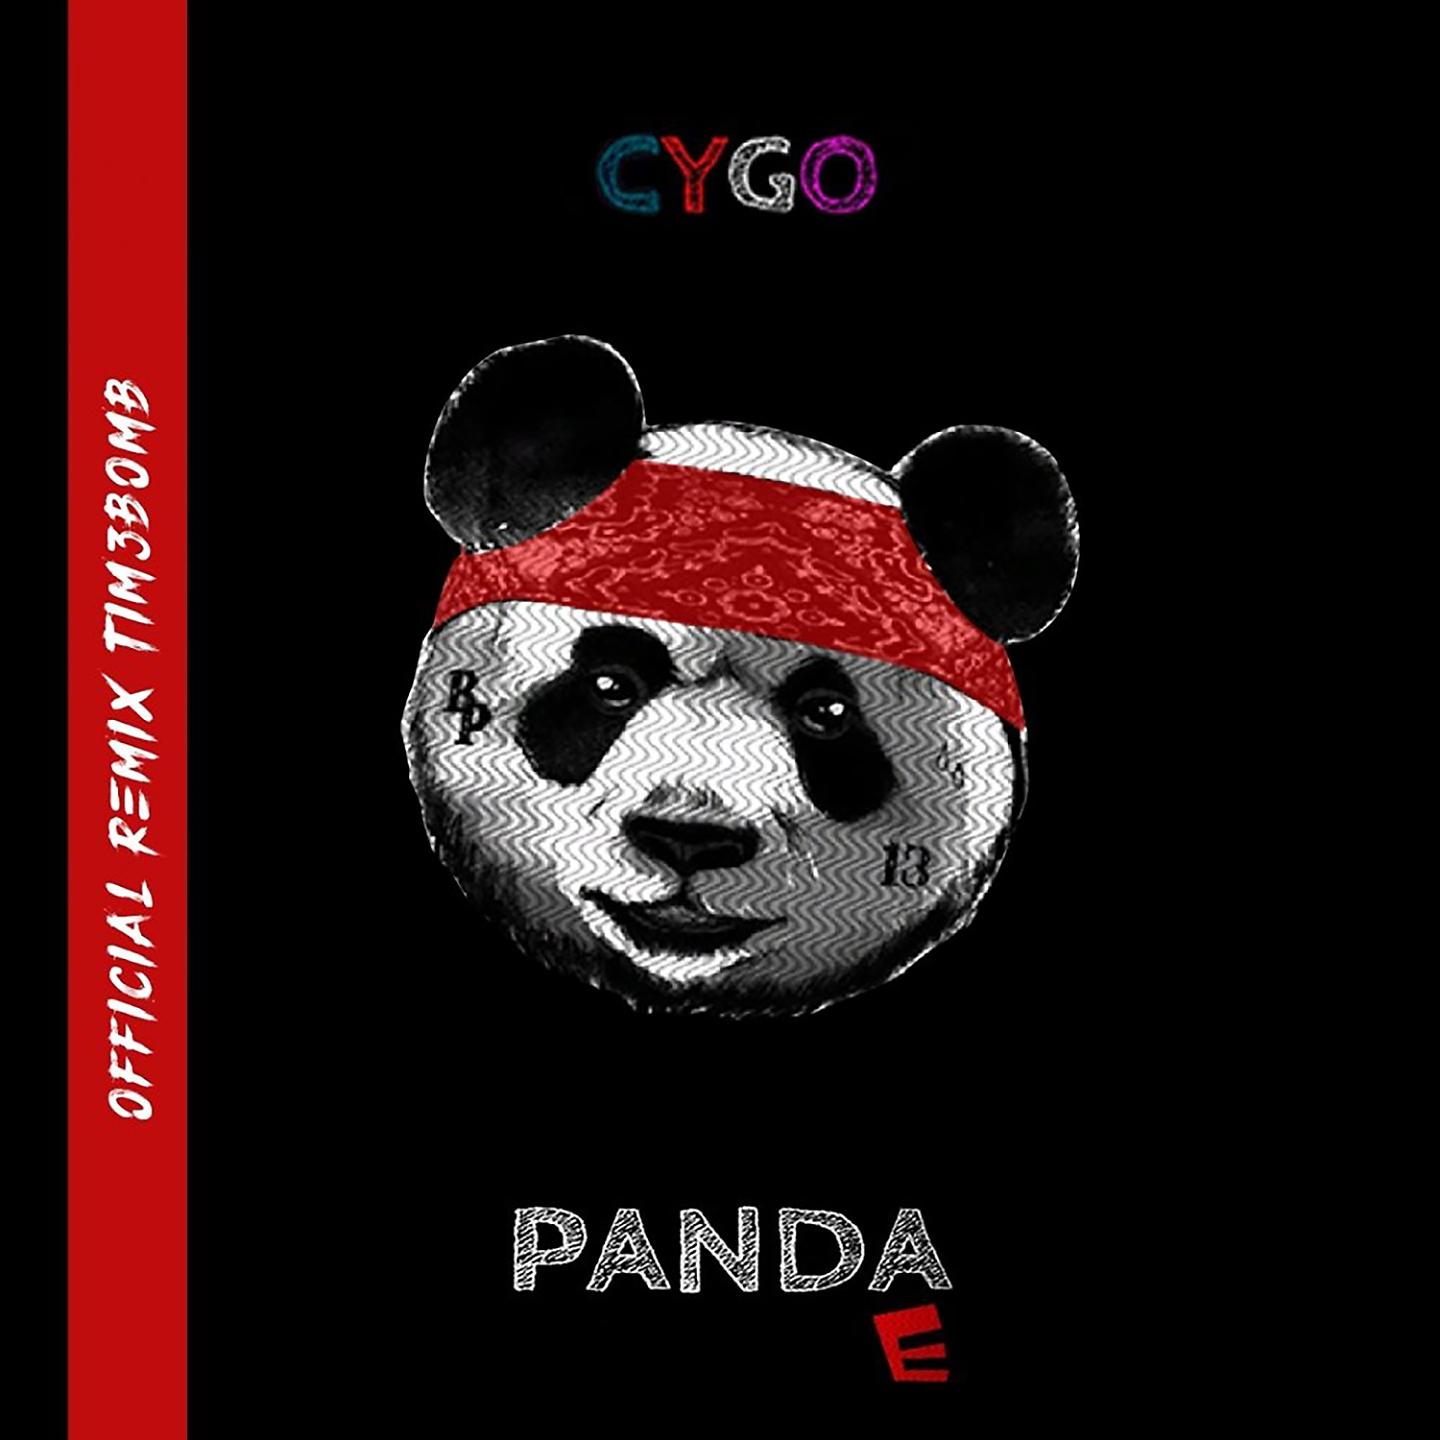 Панда правда покорила. CYGO Panda. Panda CYGO обложка. Панда е. Сайго – Панда е.